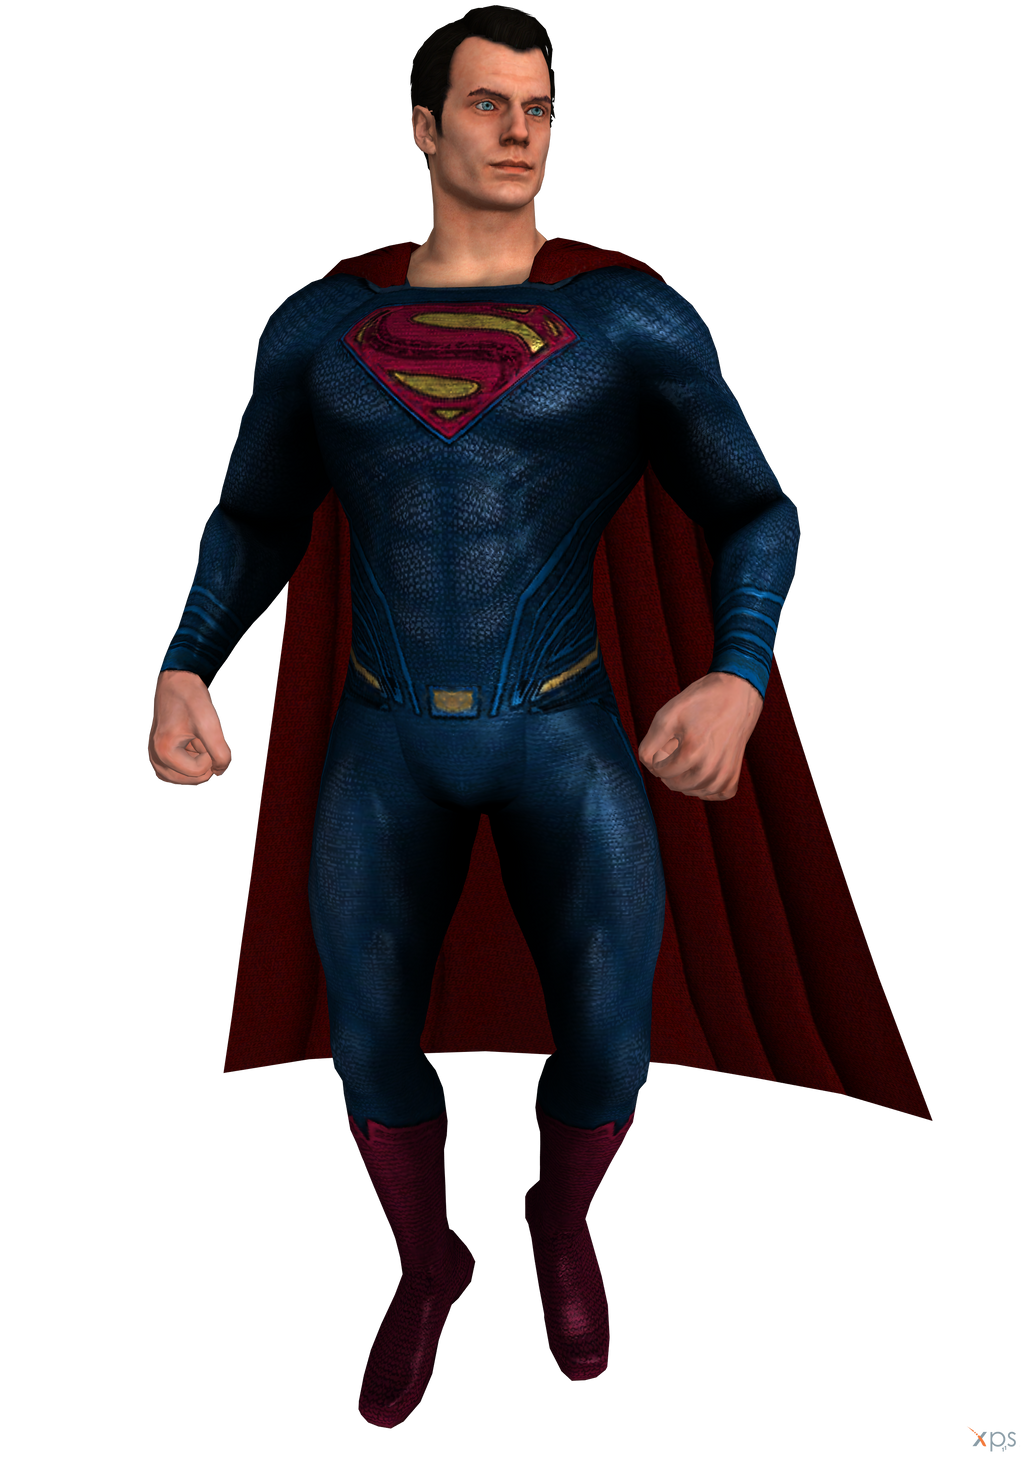 Injustice 2 (IOS): BvS Superman.